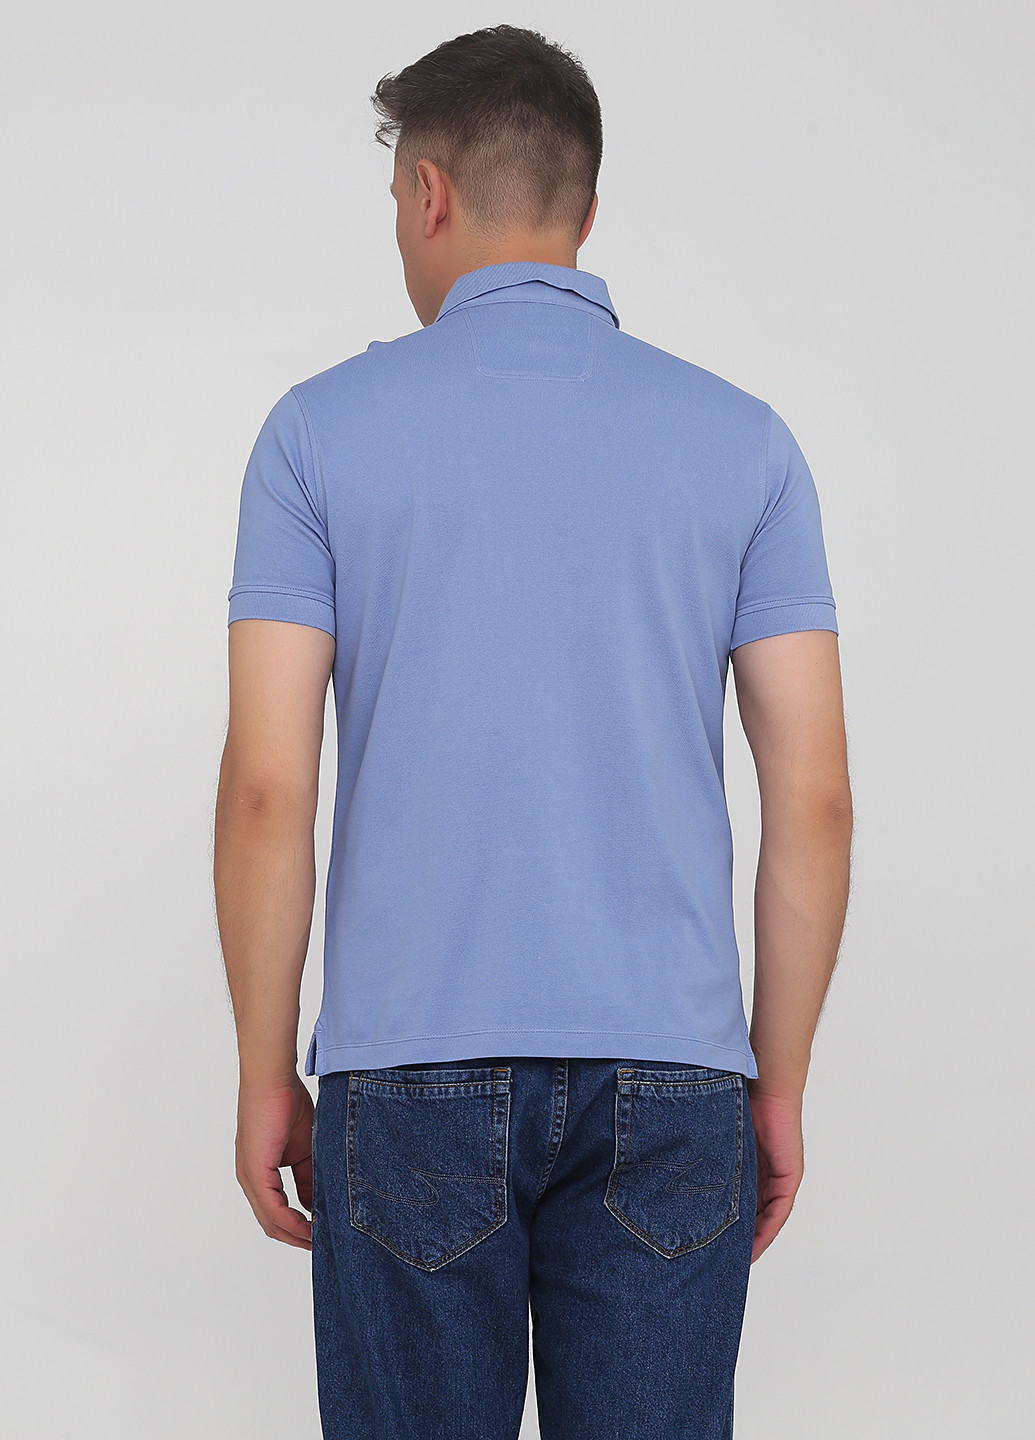 Голубой футболка-поло для мужчин Faconnable однотонная